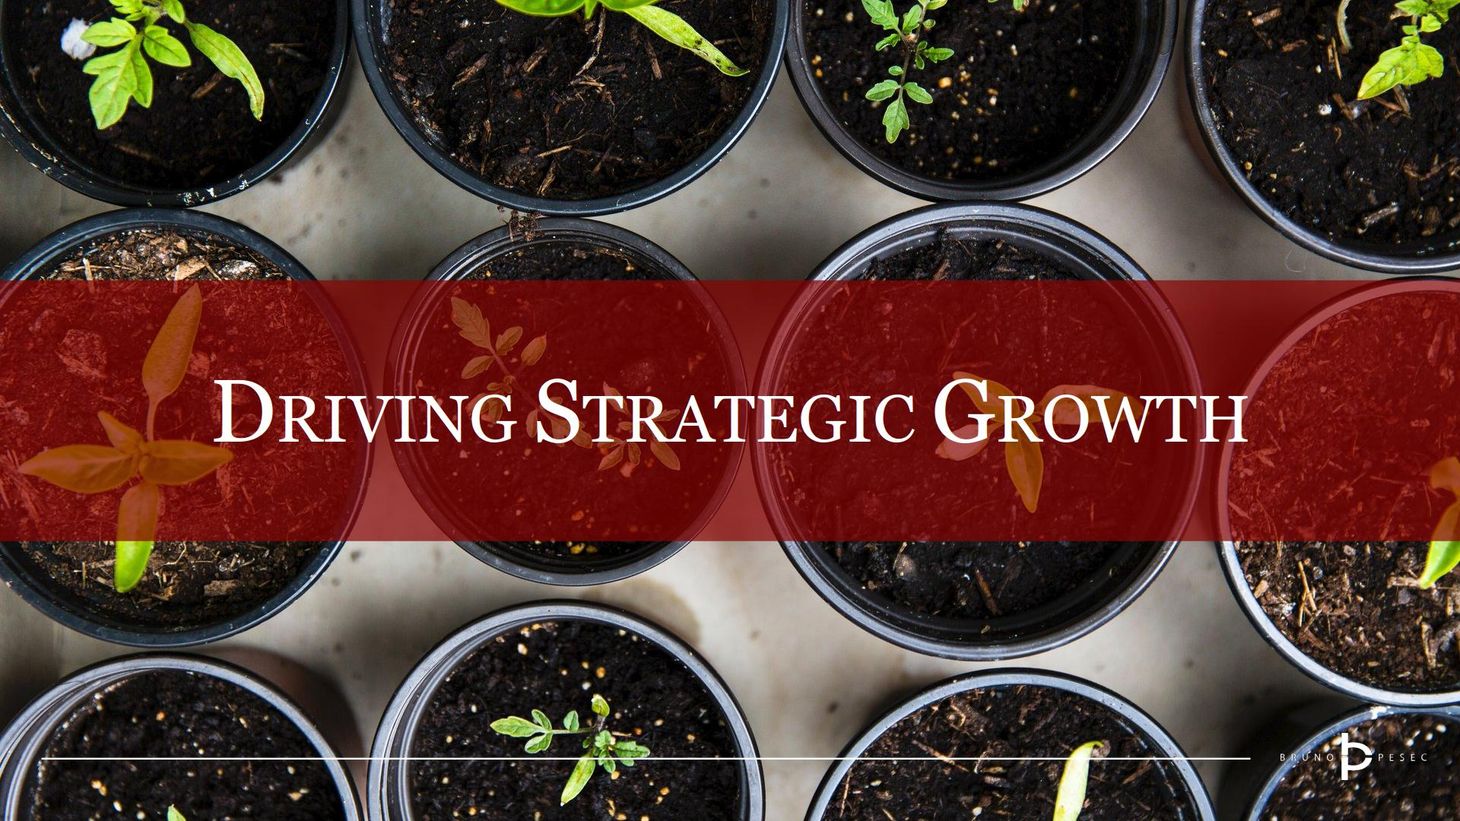 Driving strategic growth